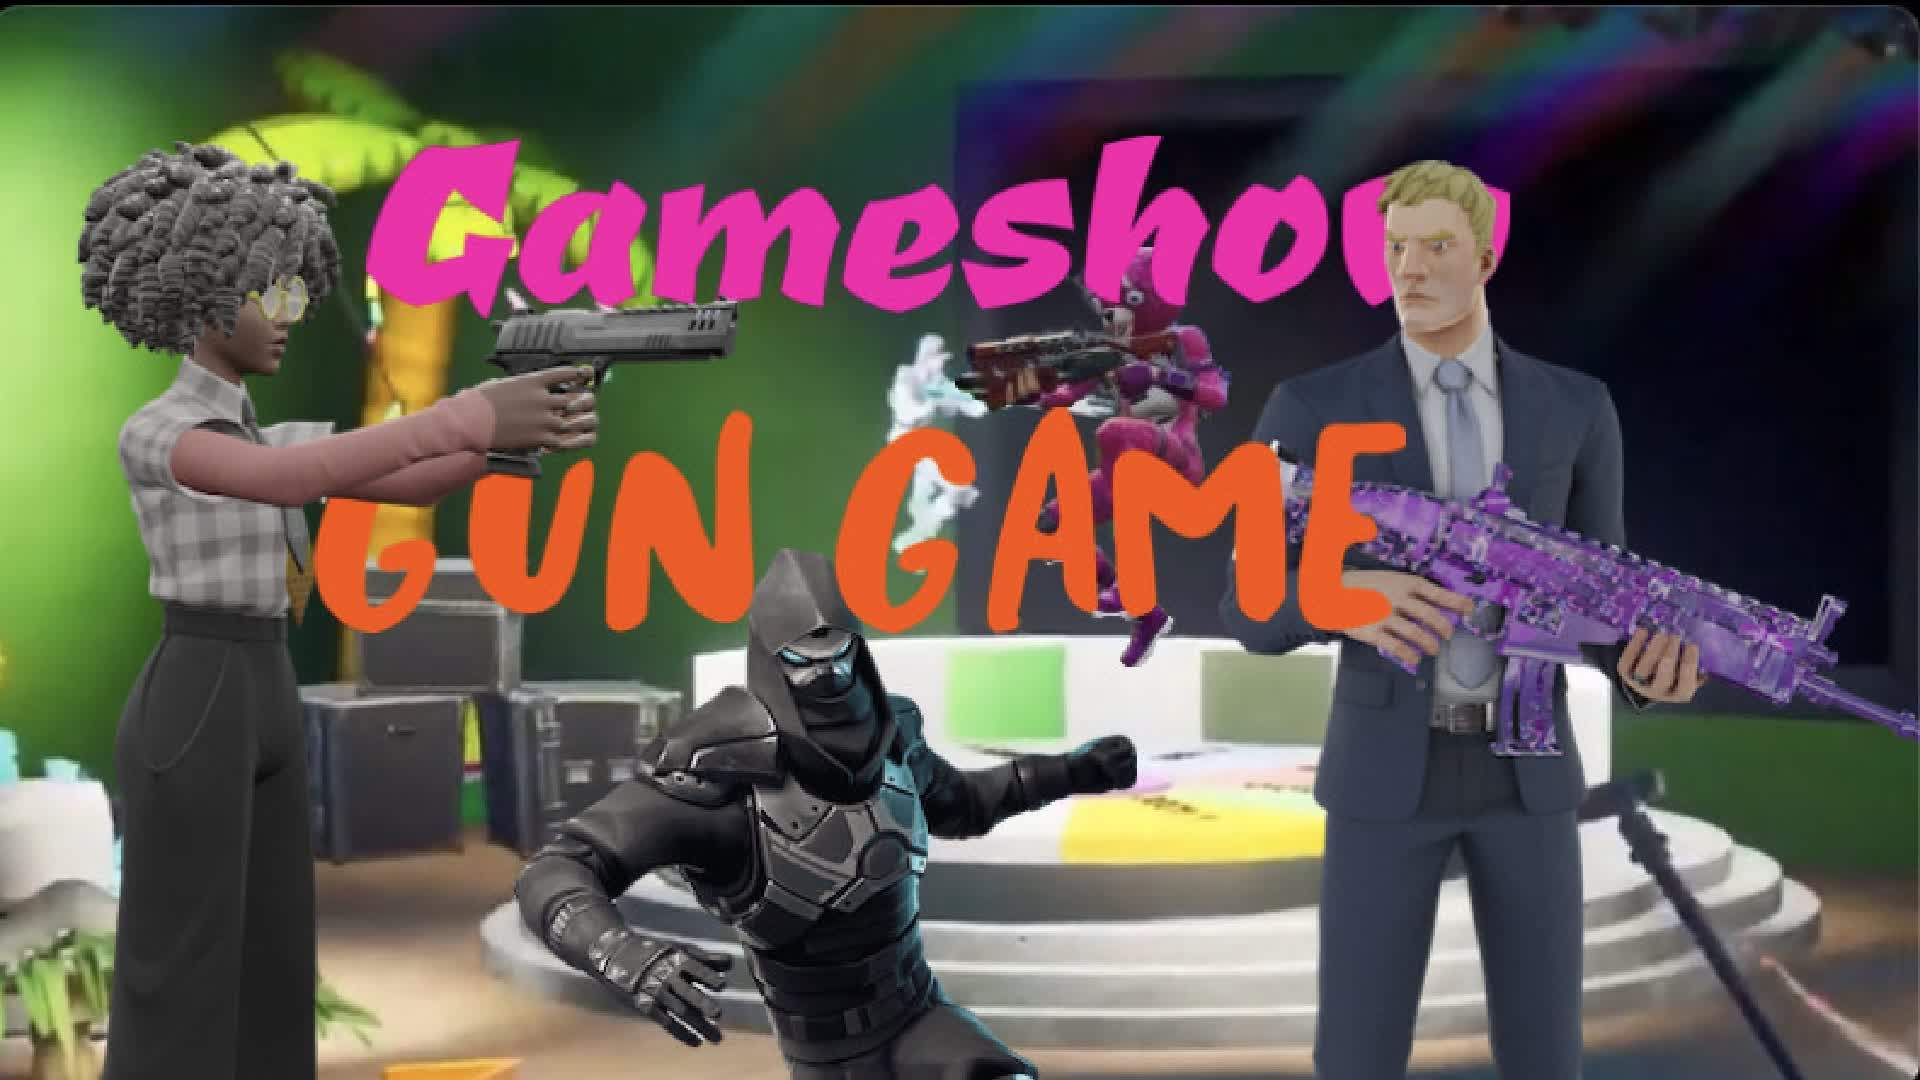 Gameshow Gun Game